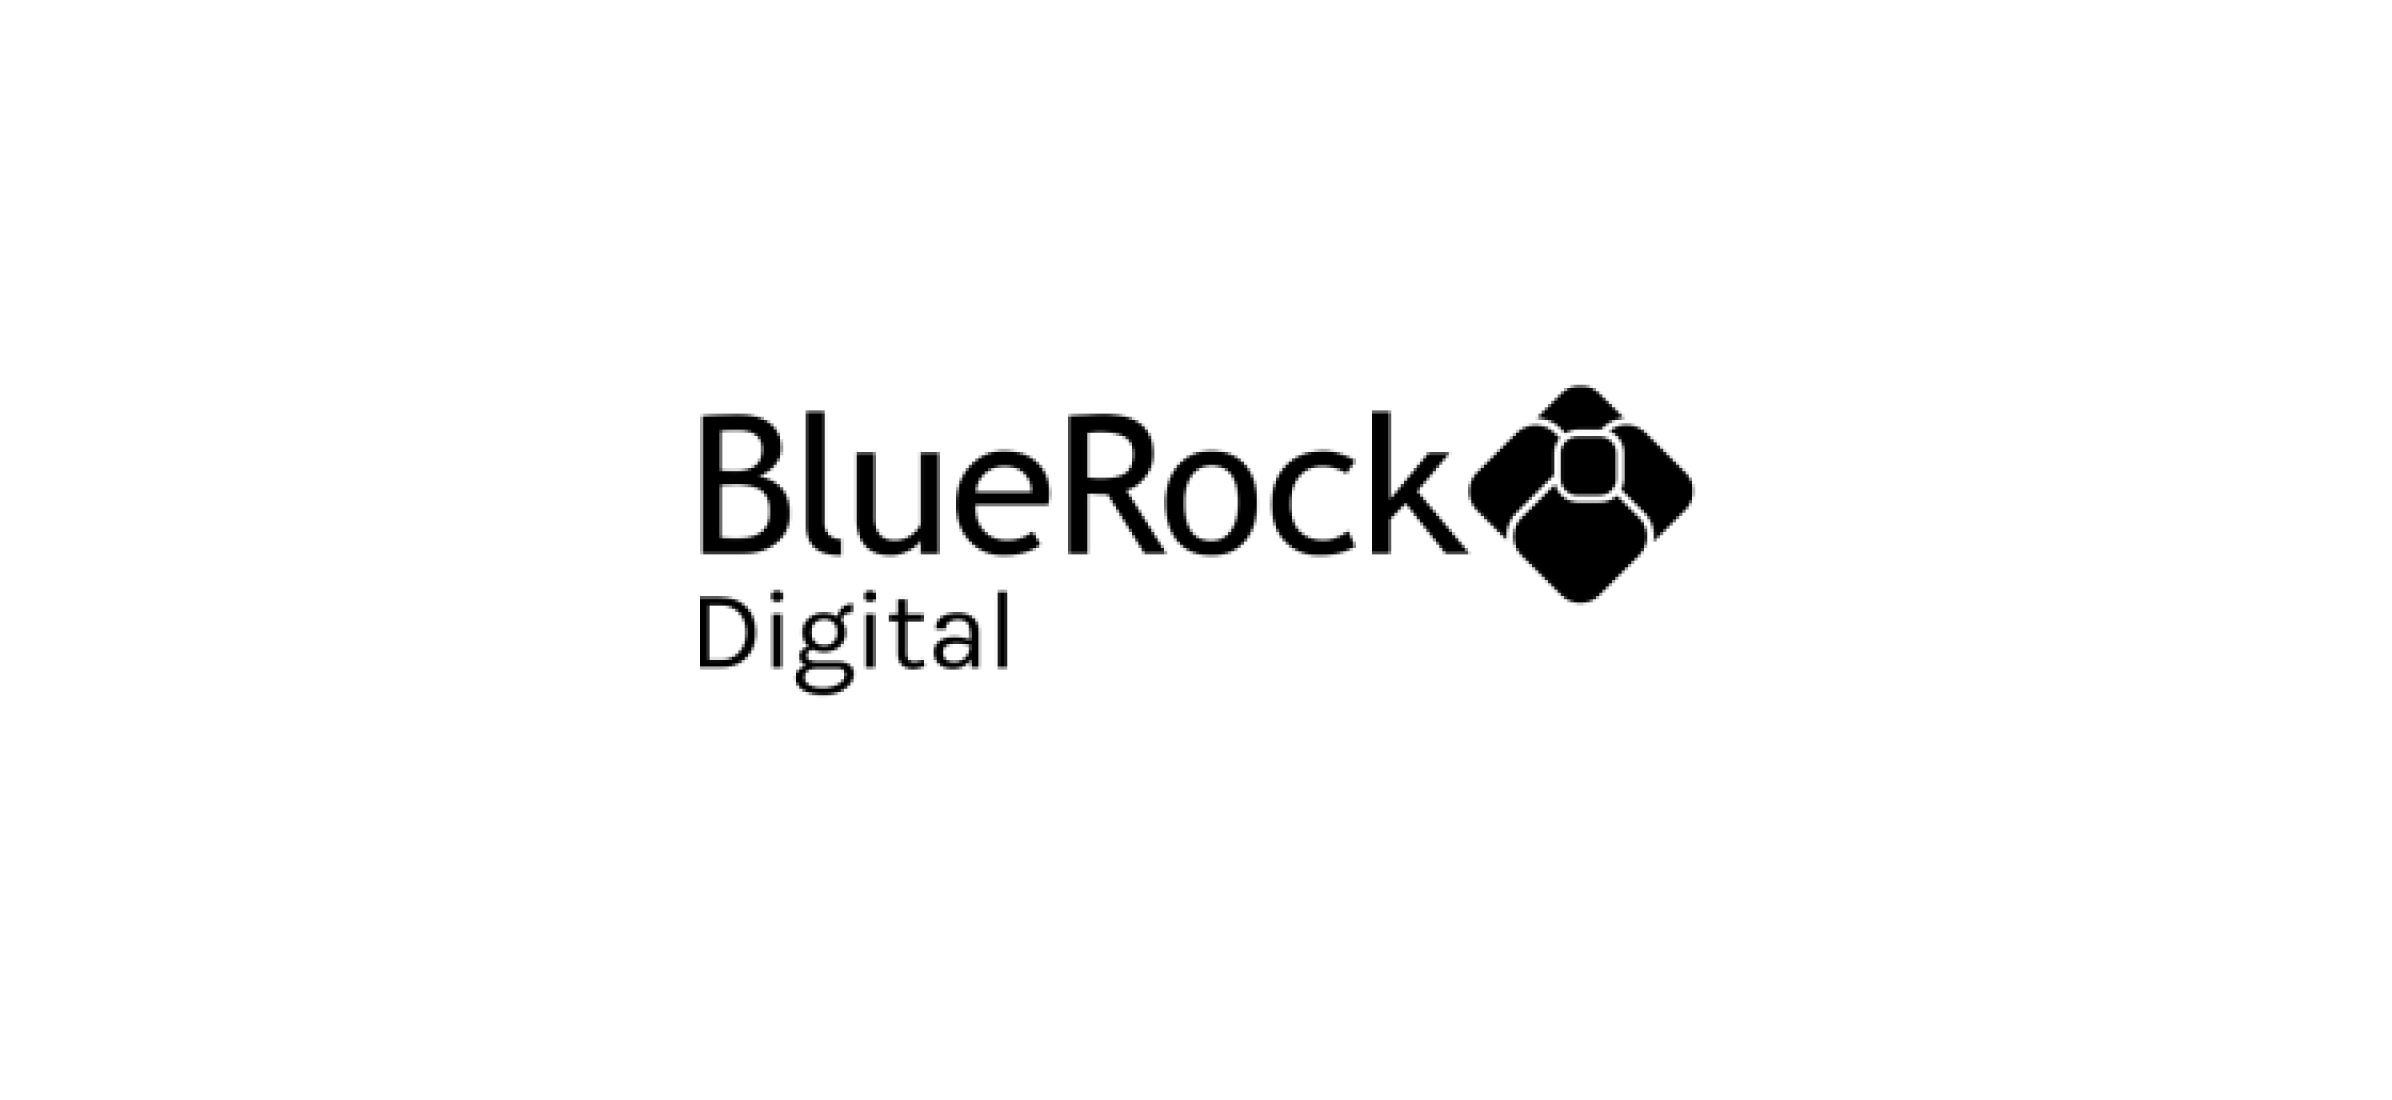 The Bluerock Digital logo